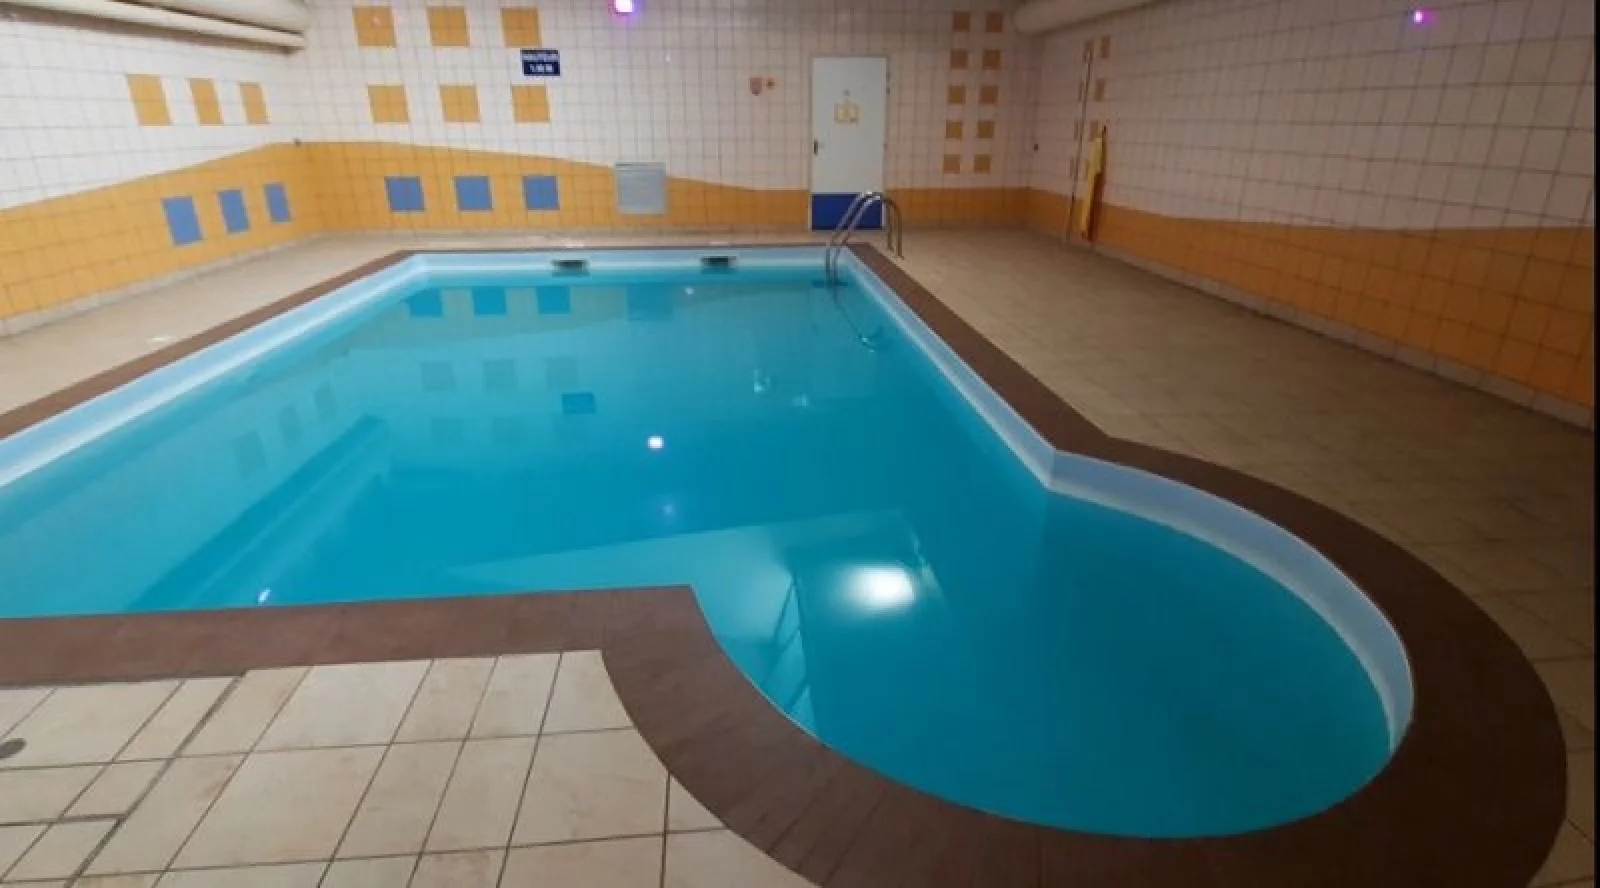 Location studio meubl 21m avec piscine (Poitiers)